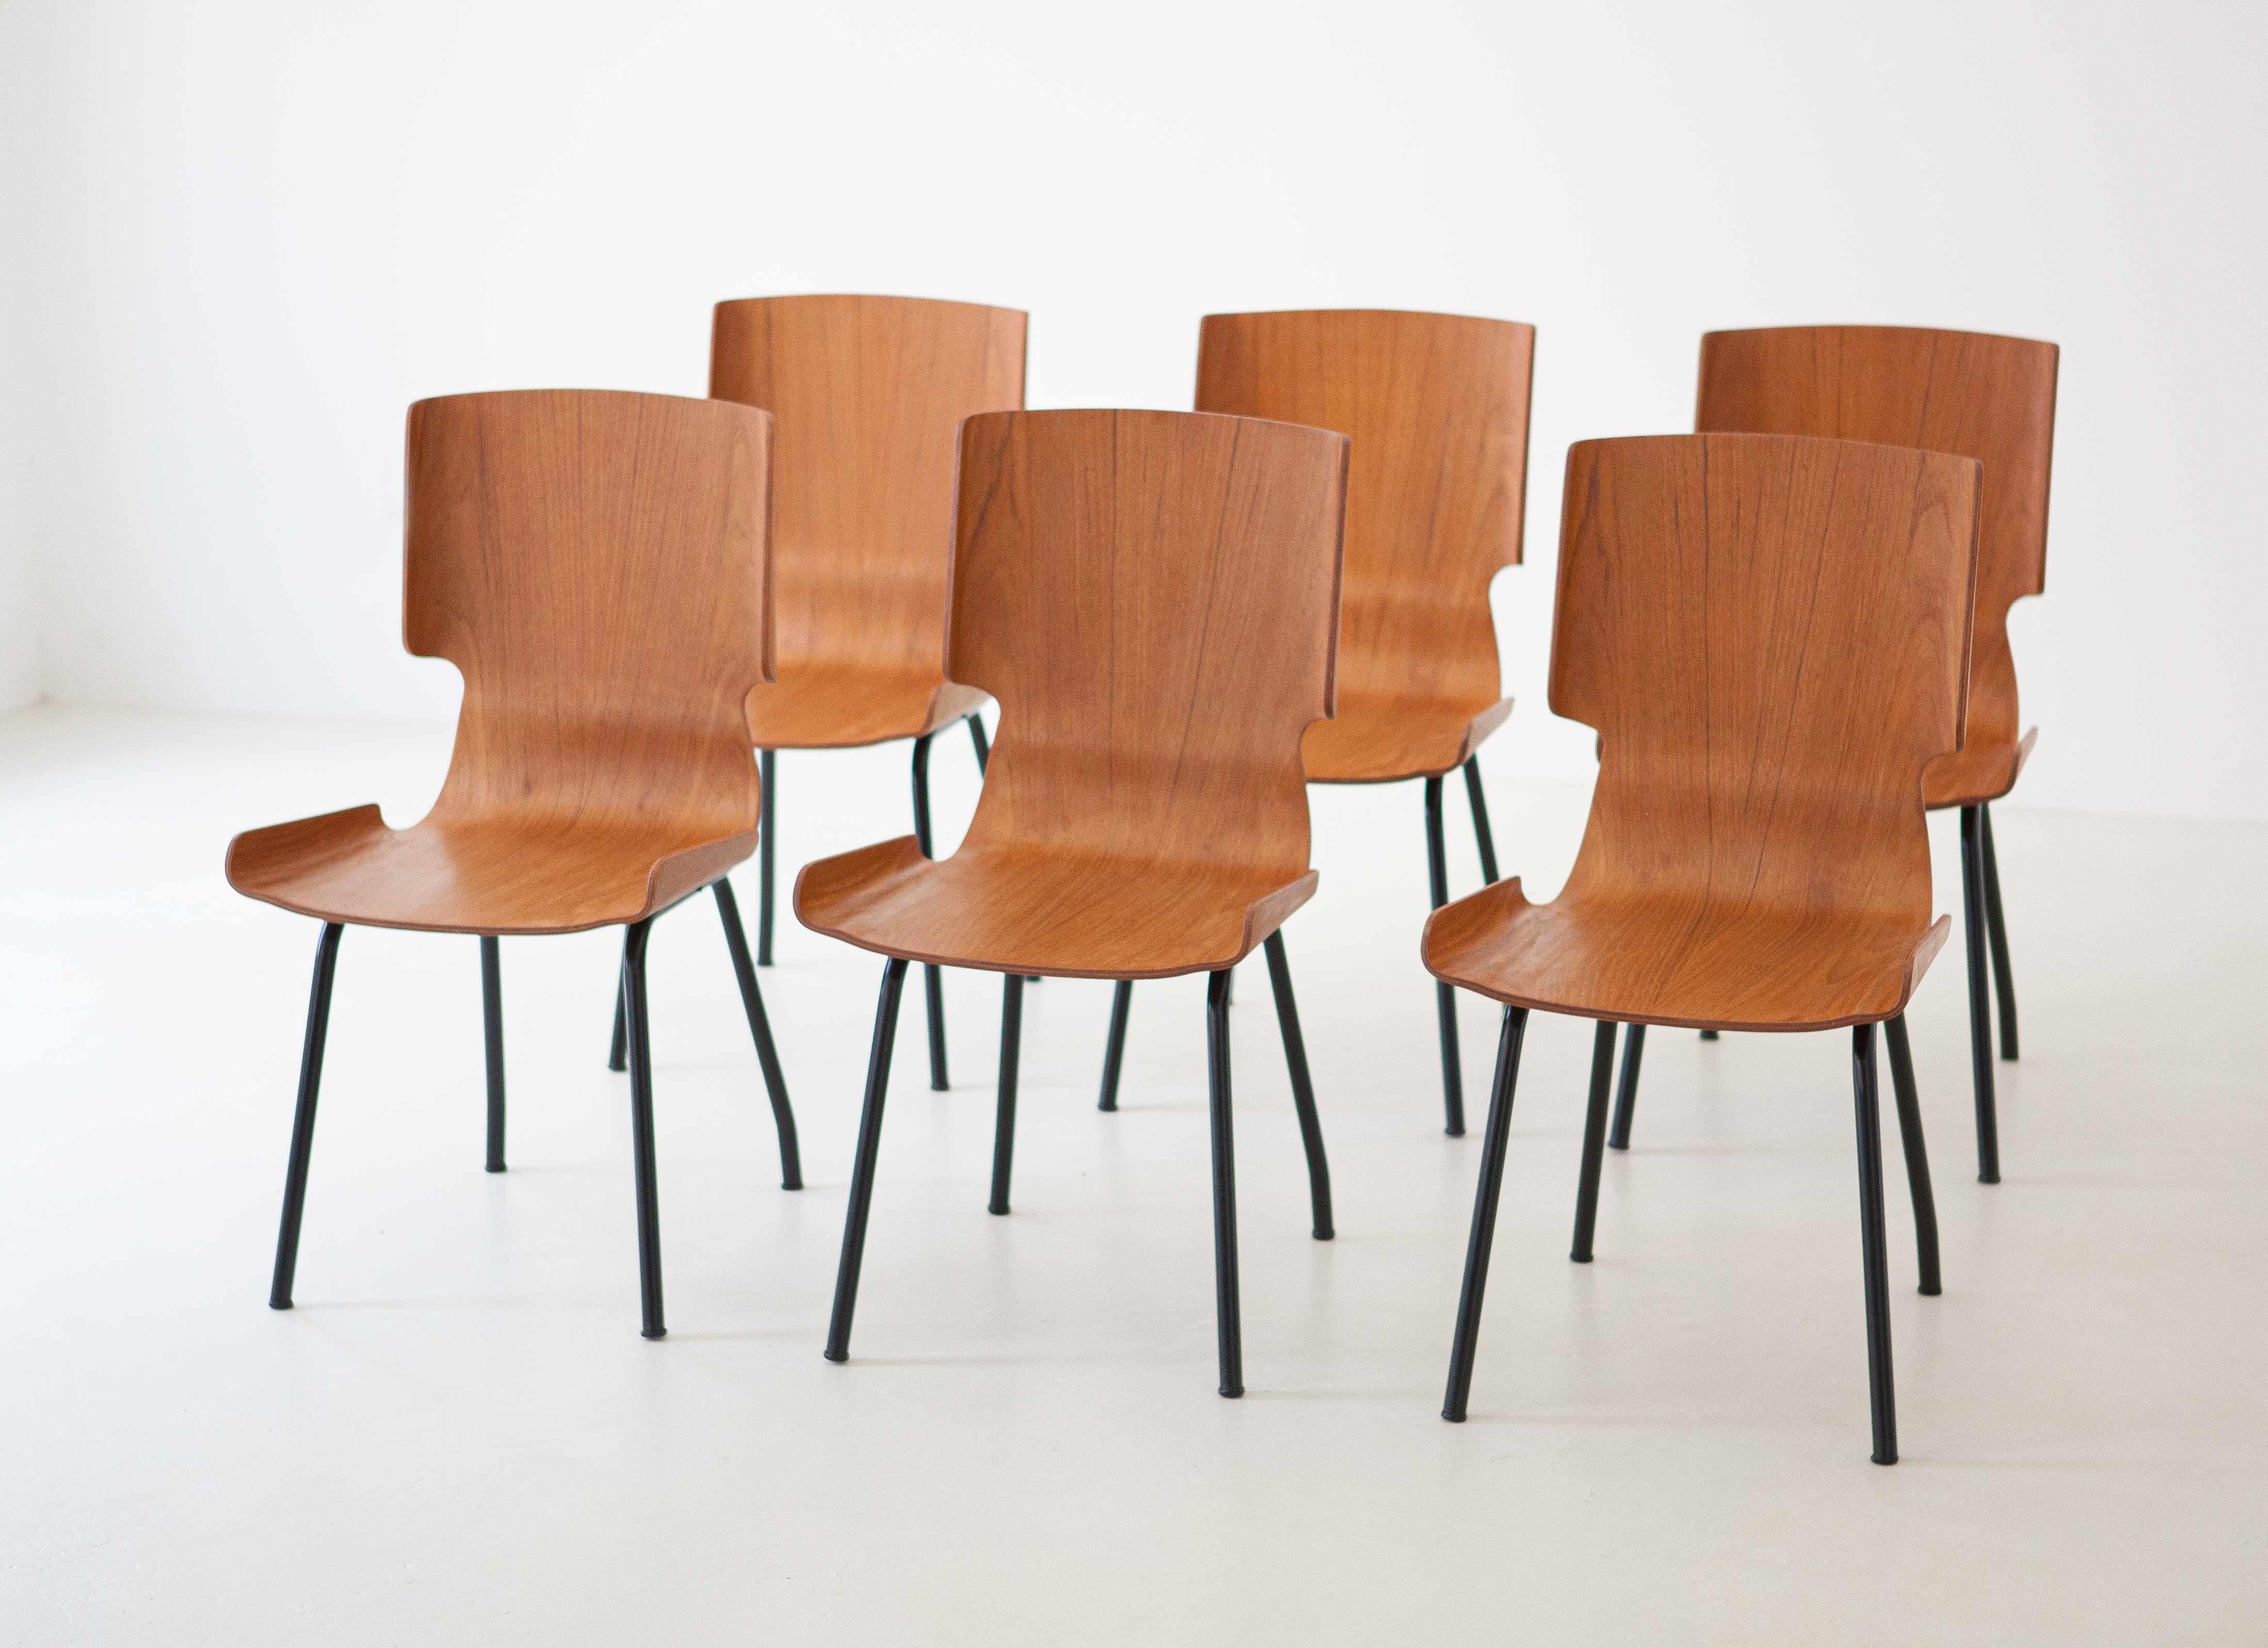 1950s Italian Curved Teak Chairs by SCC Societa’ Compensati Curvi, Set of Six For Sale 9